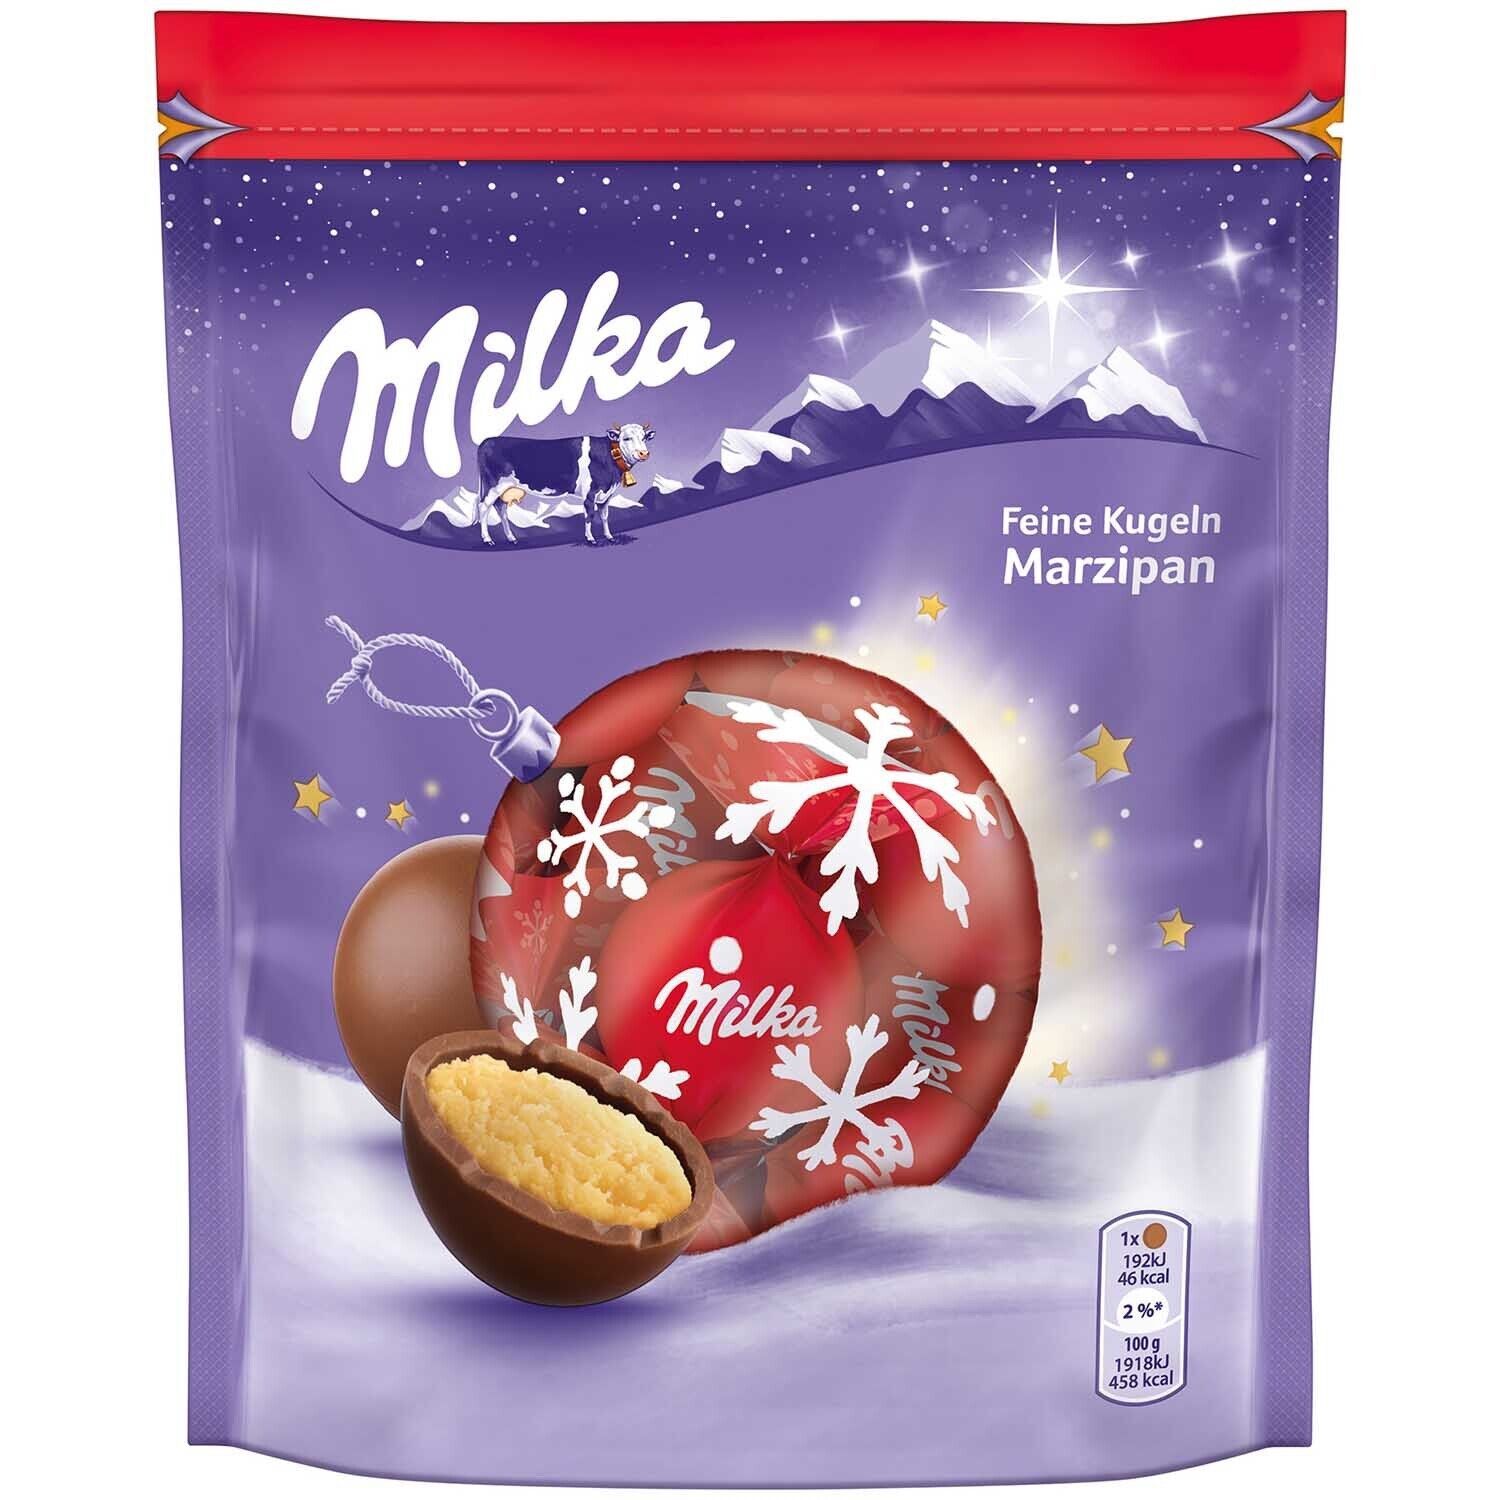 Milka Christmas MARZIPAN Milk chocolate eggs 90g -FREE SHIPPING - $10.88